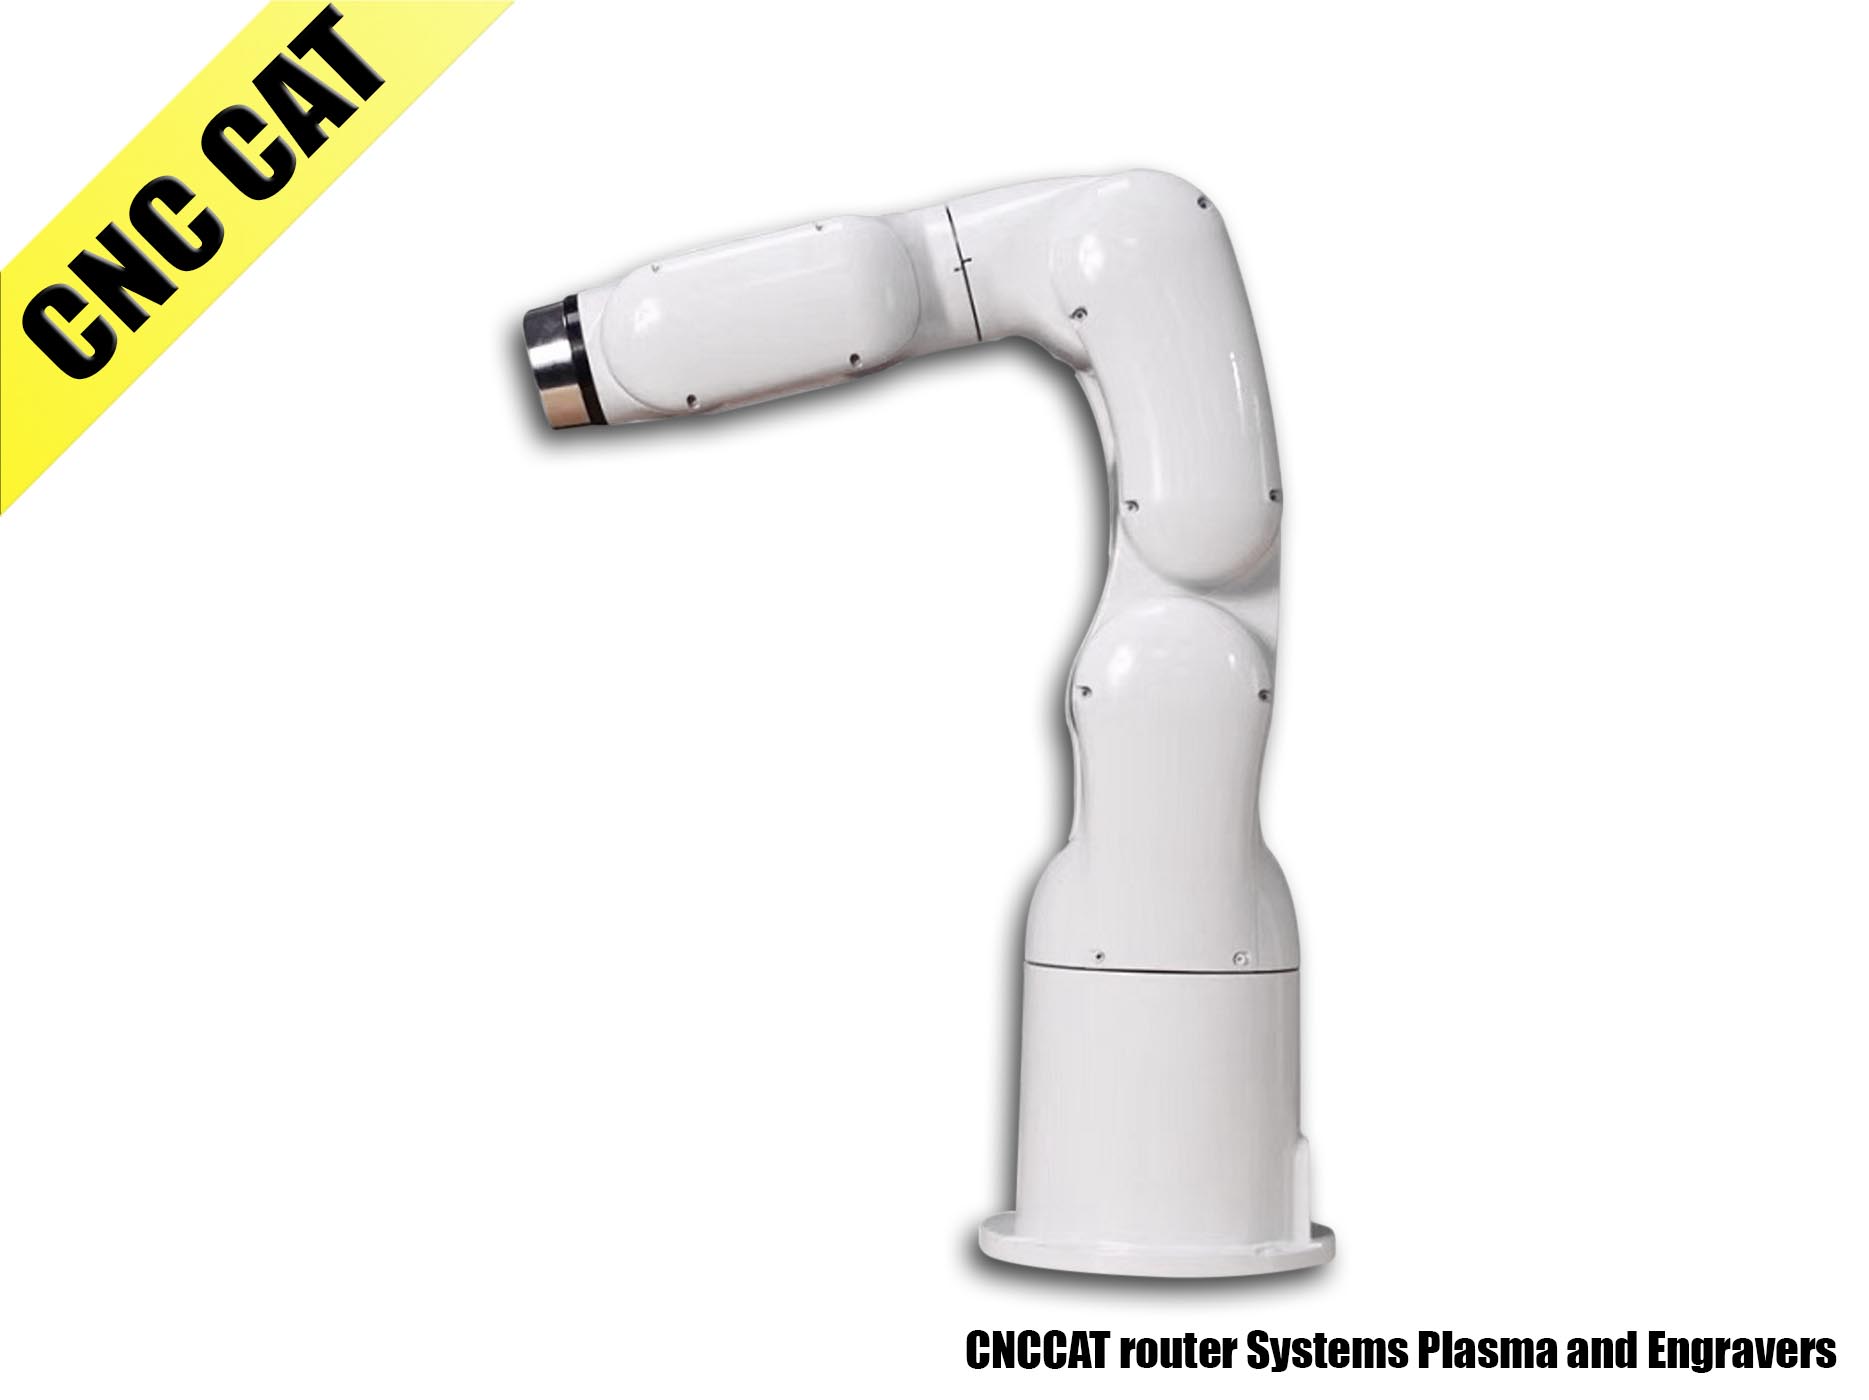 Educational & Light Product Handling Robotic Arm